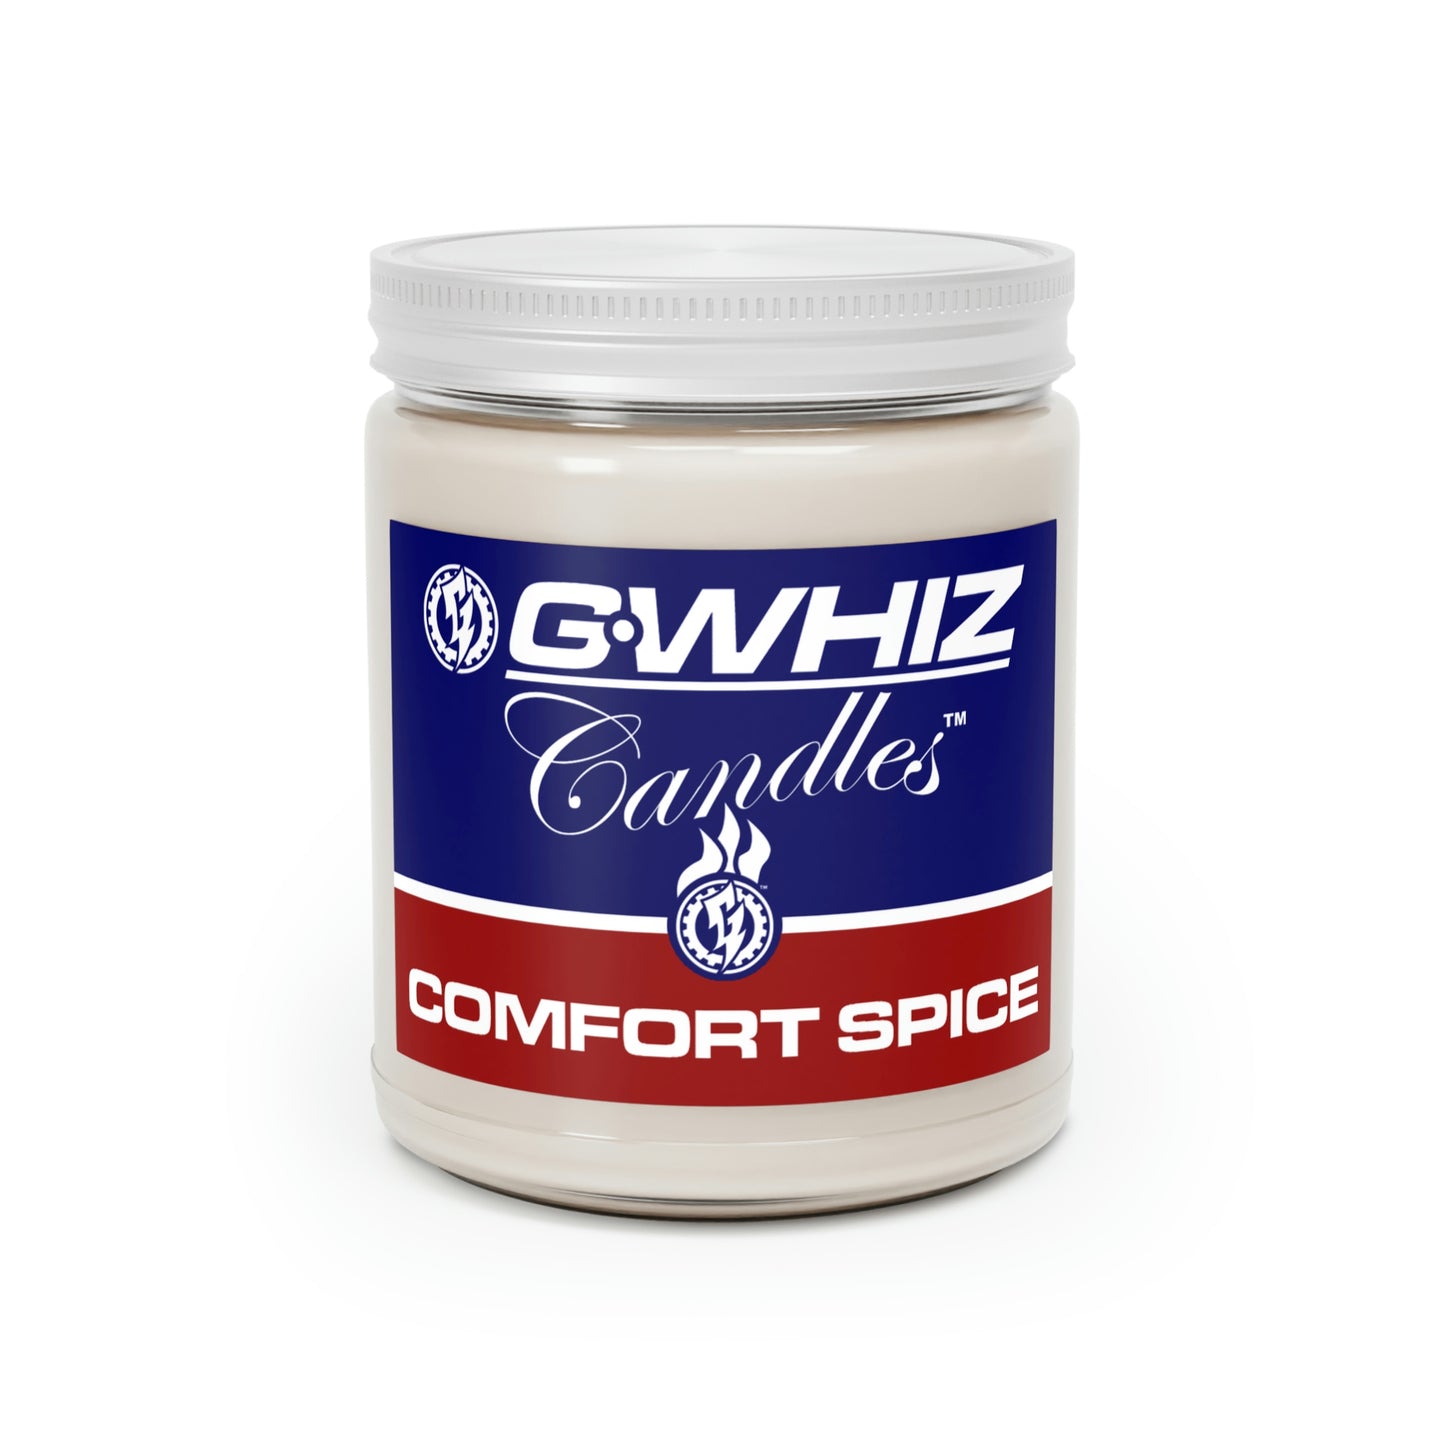 G-WHIZ CANDLES - COMFORT SPICE, 9oz